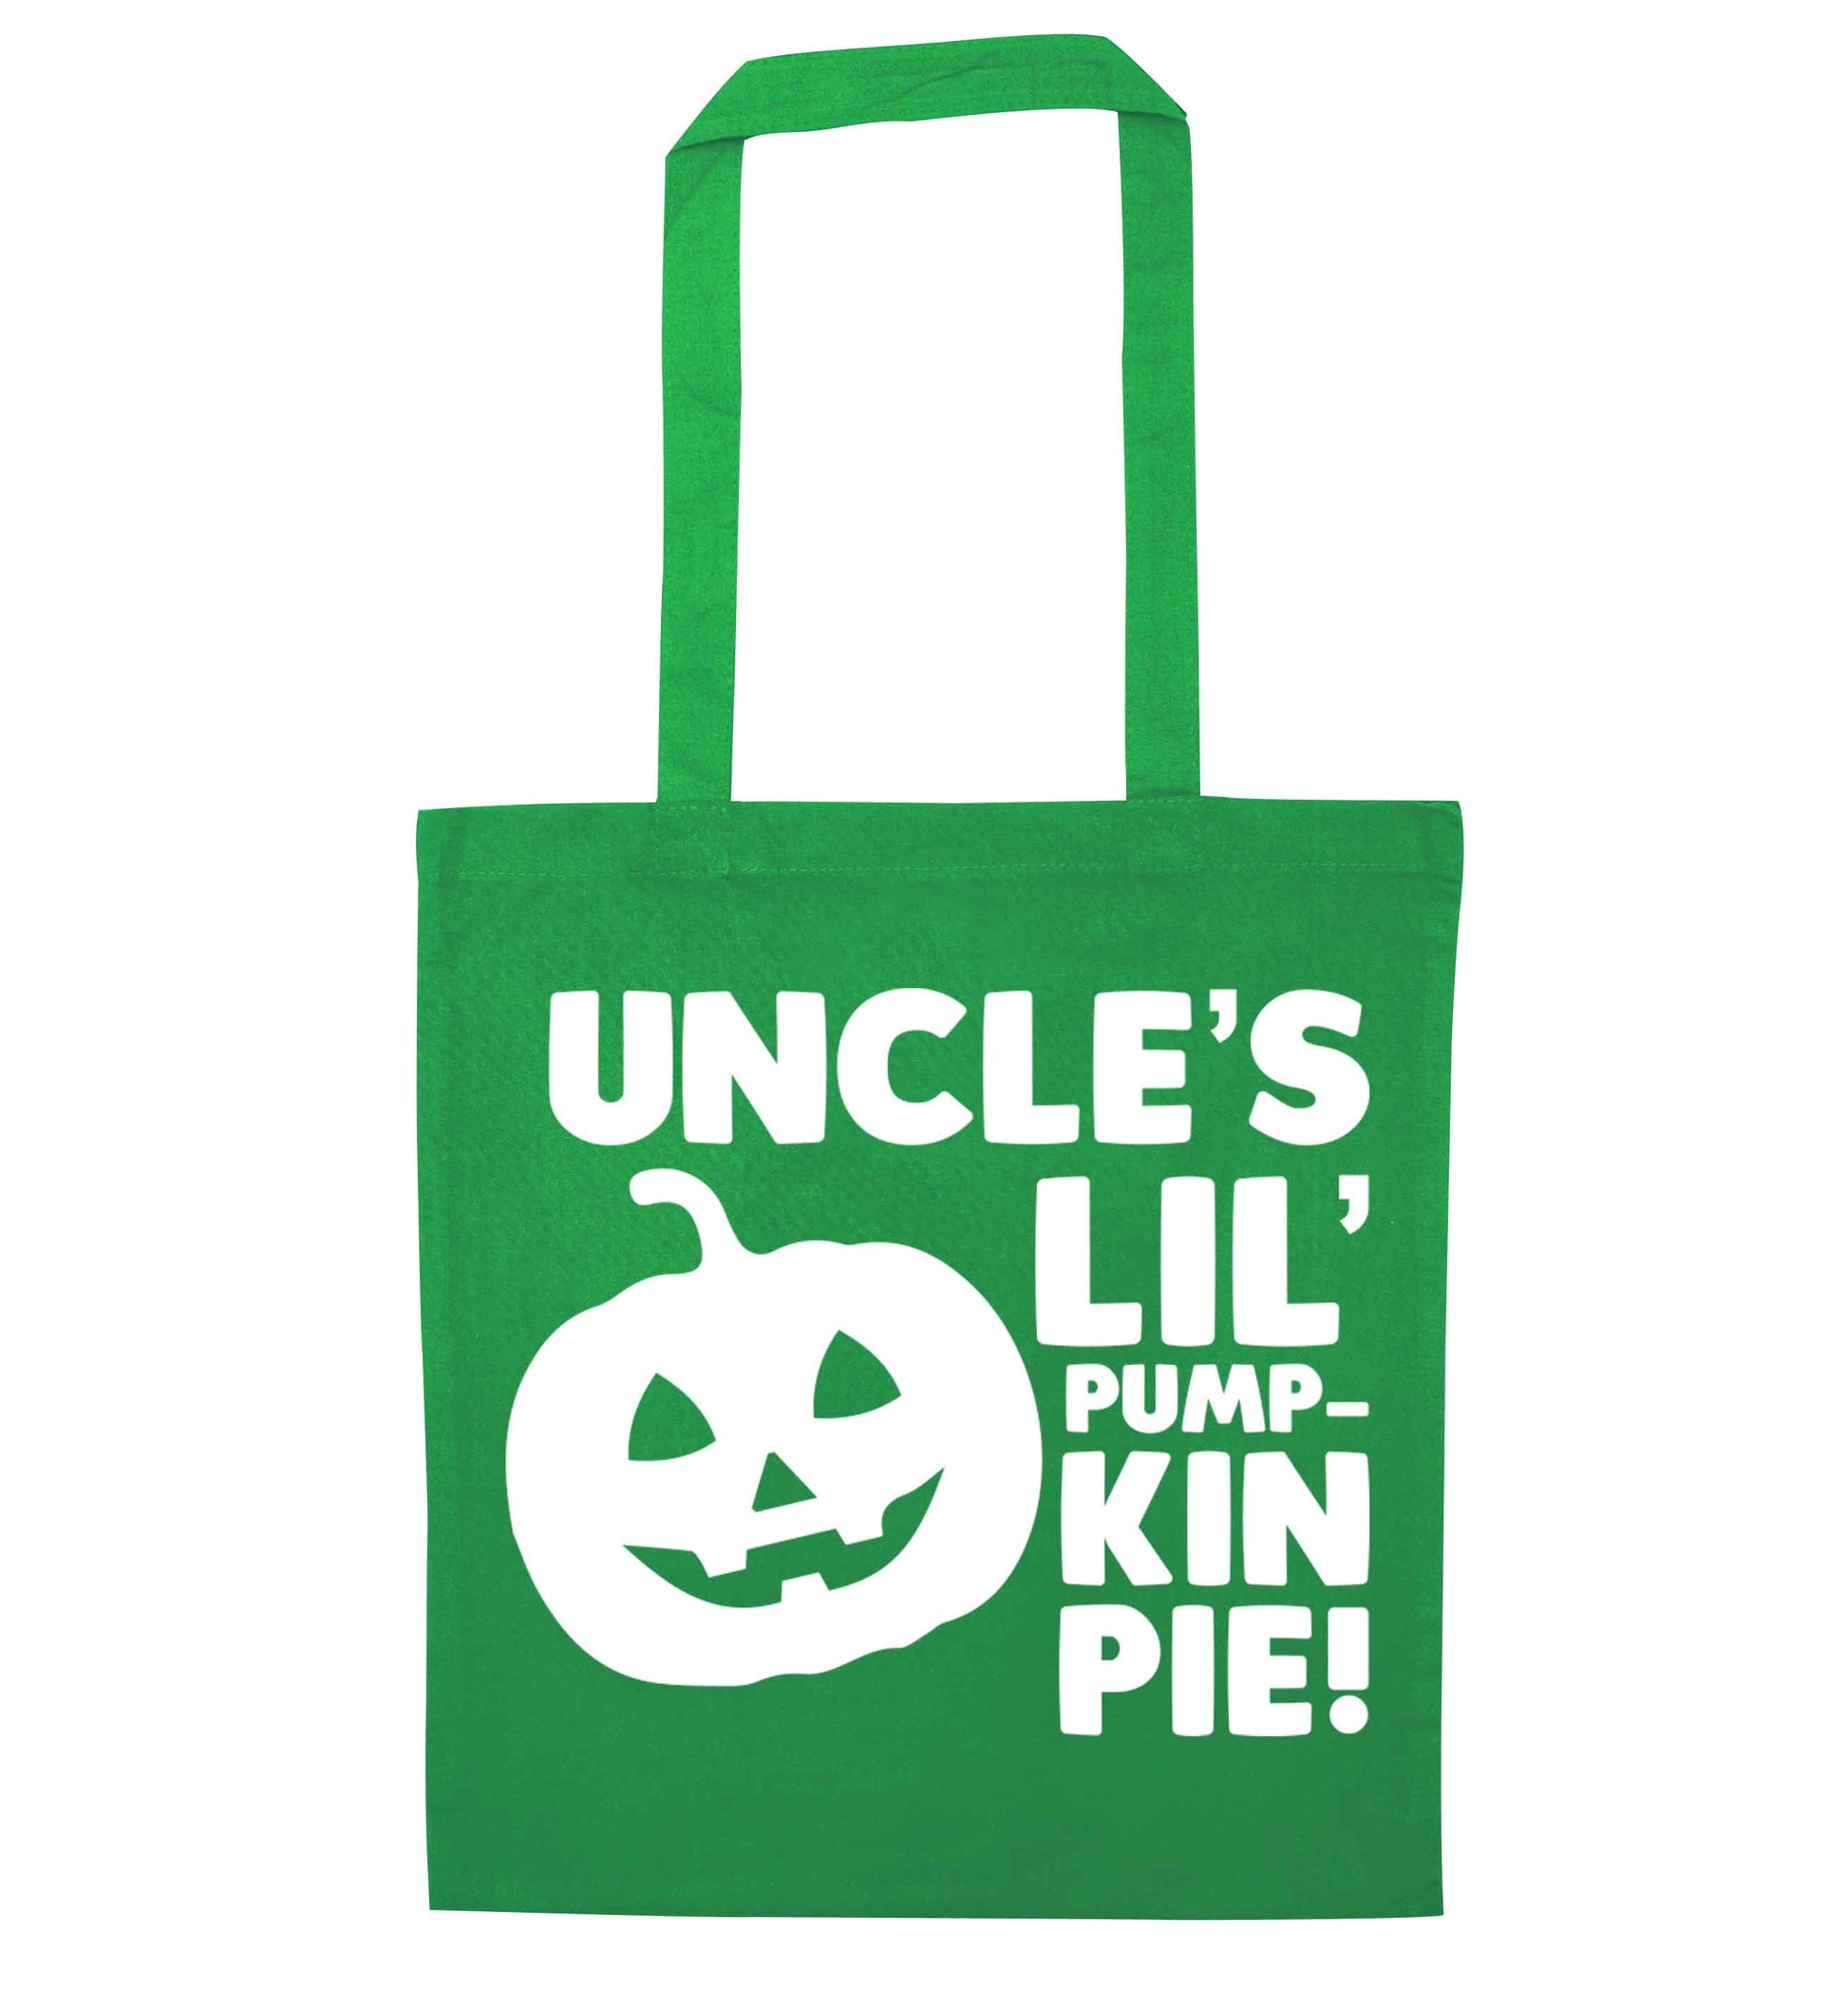 Uncle's lil' pumpkin pie green tote bag